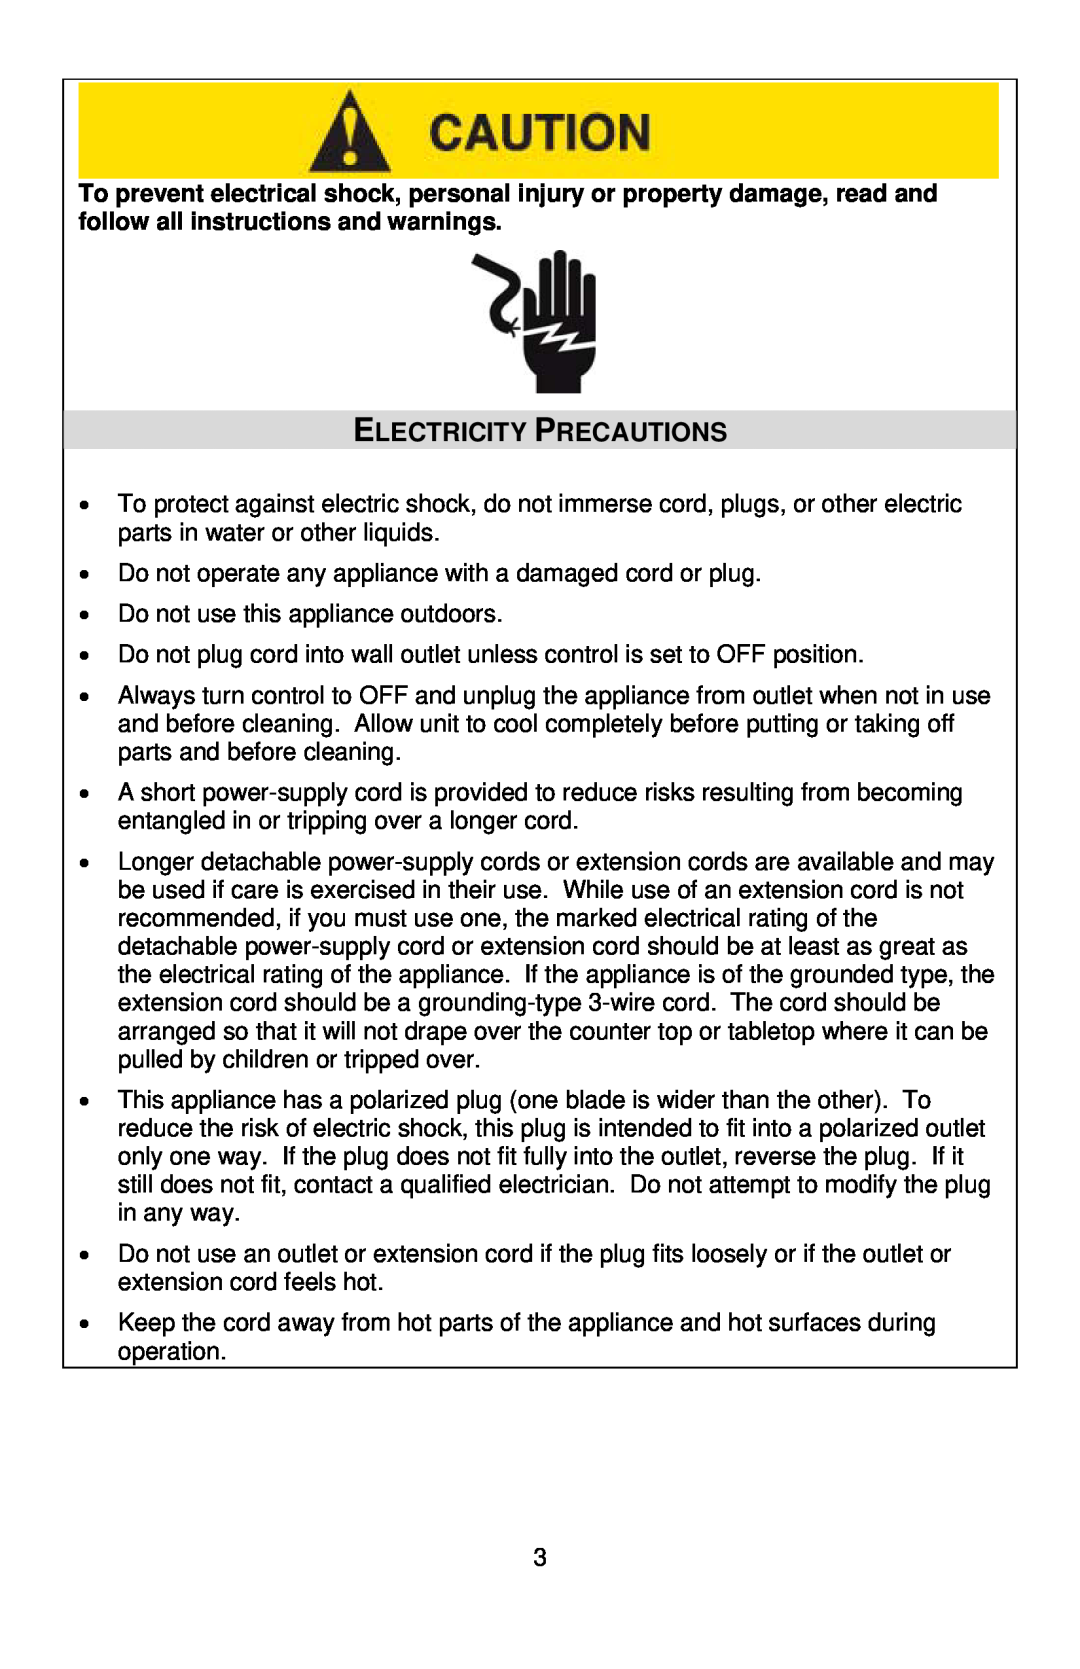 West Bend 6111, L5556B instruction manual Electricity Precautions 